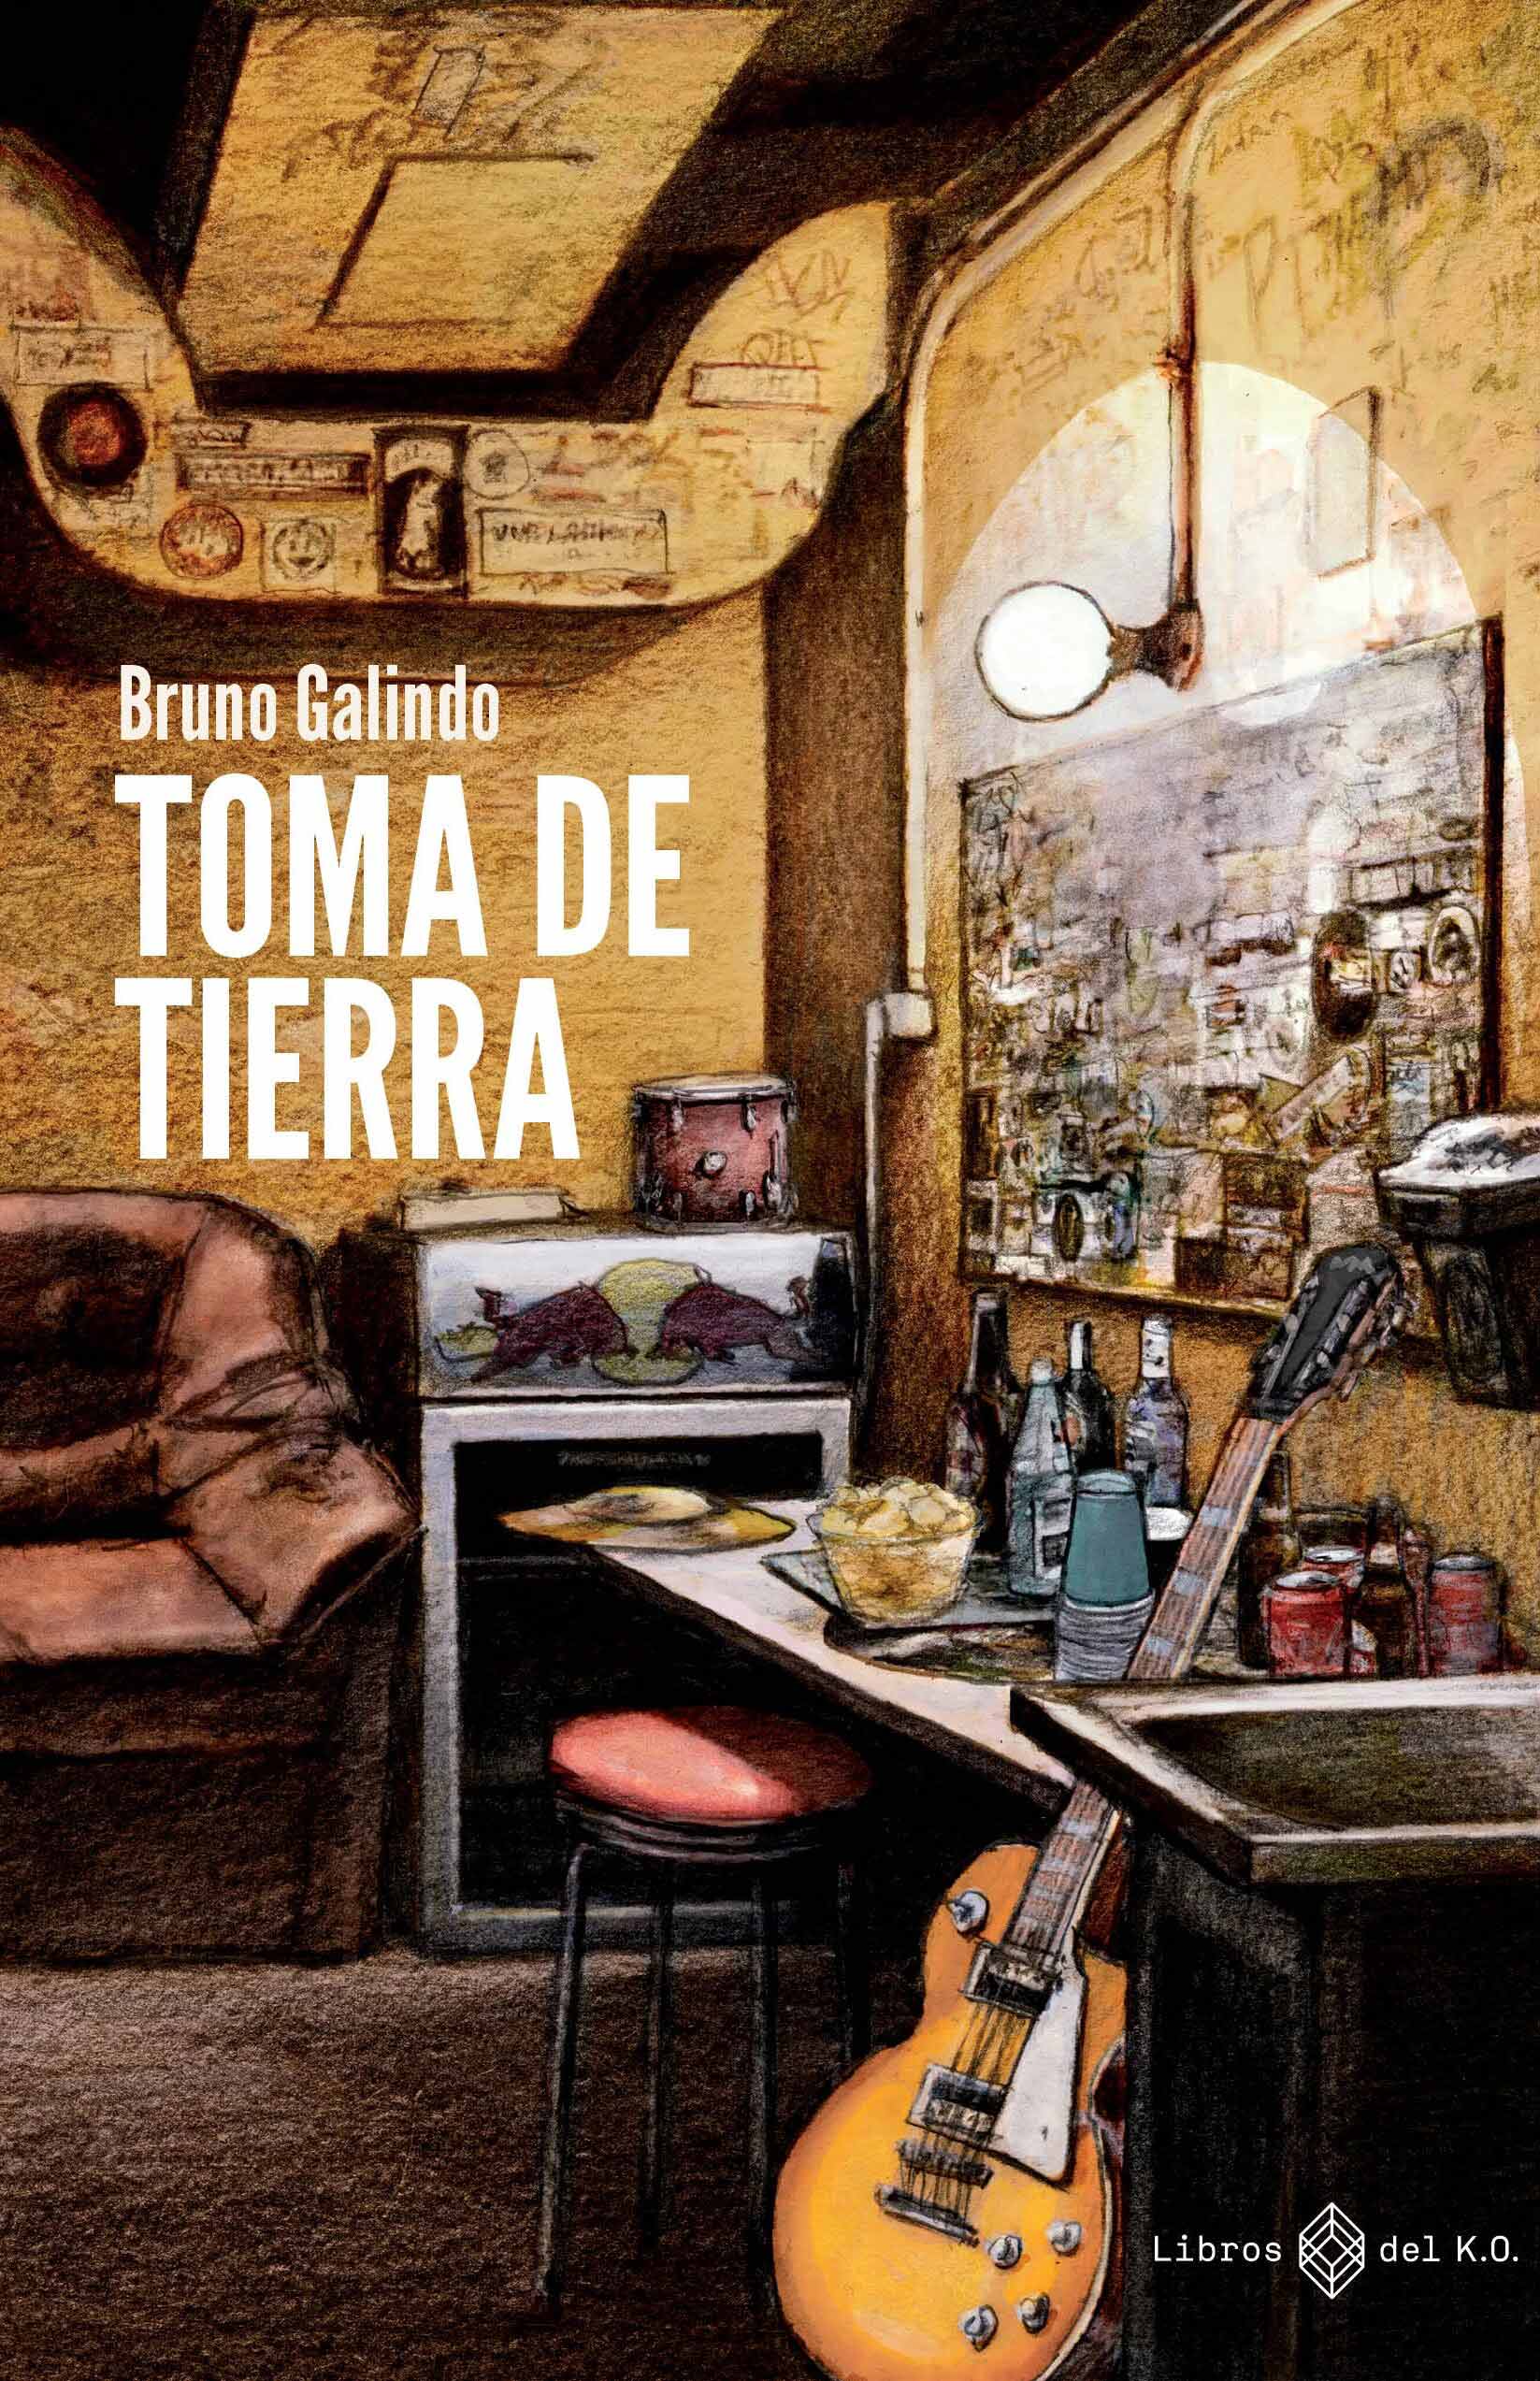 Mario Jodra Book Cover Art - Toma de tierra. Libros del K.O (publisher) 2021